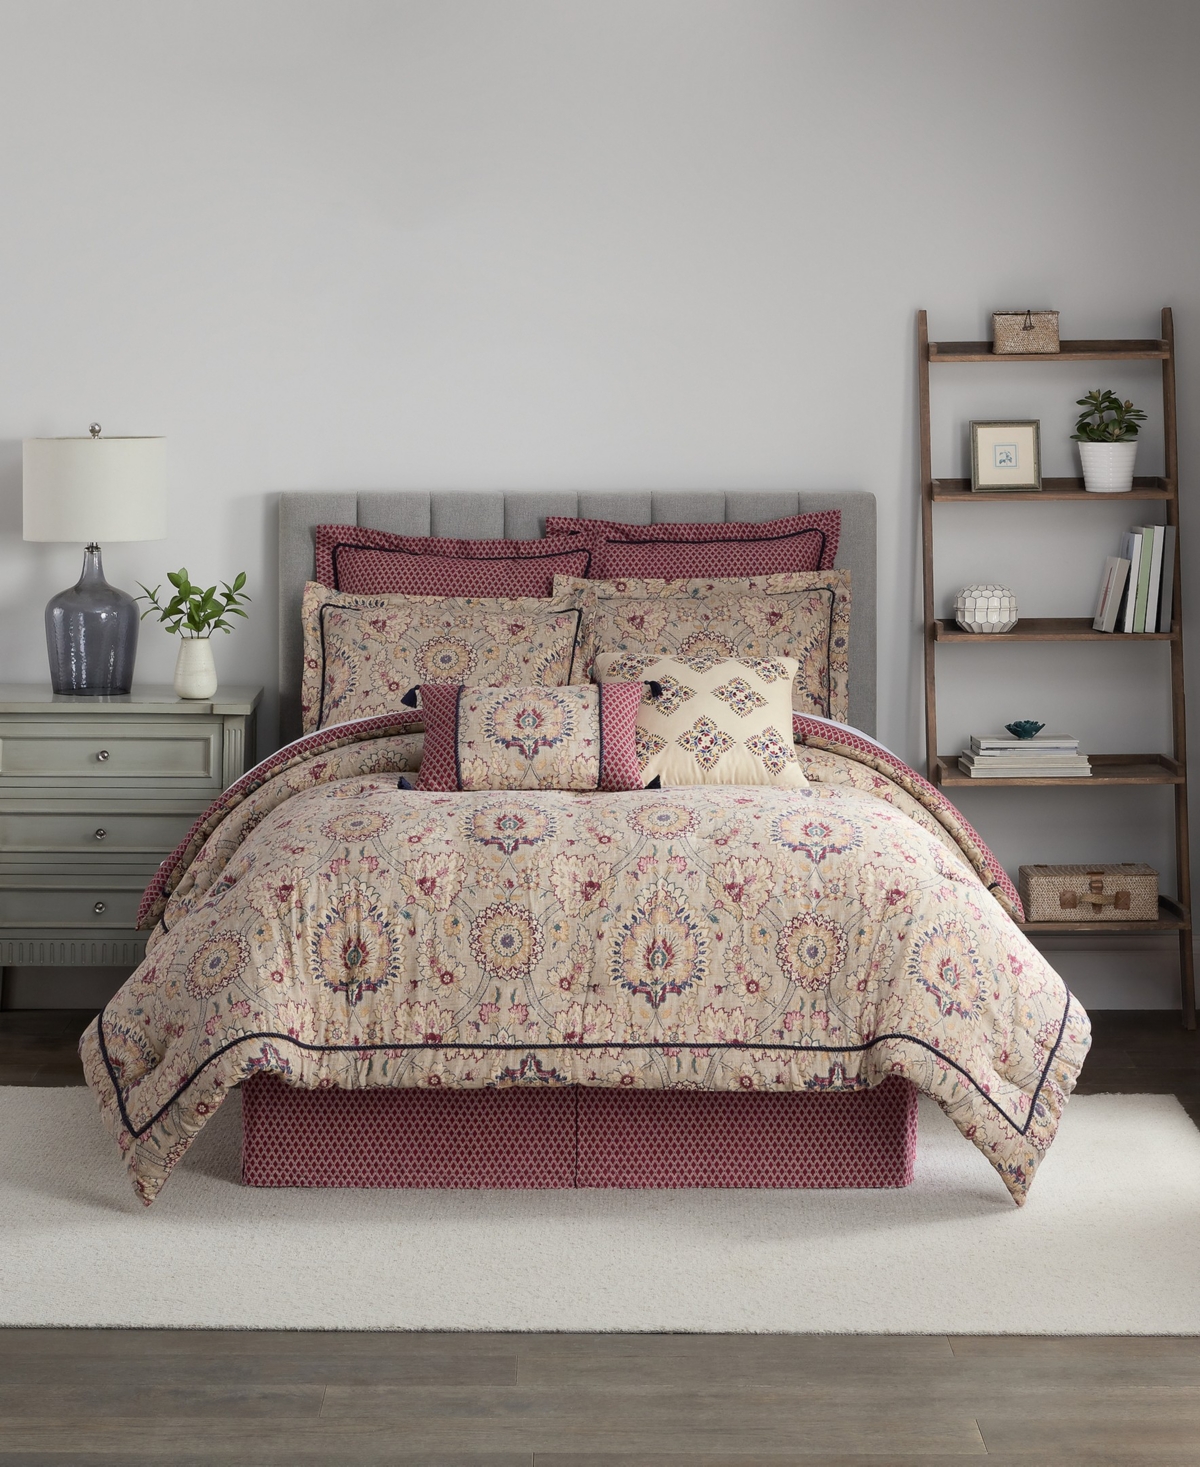 Waverly Castleford Damask 4-pc Comforter Set, Queen In Jewel